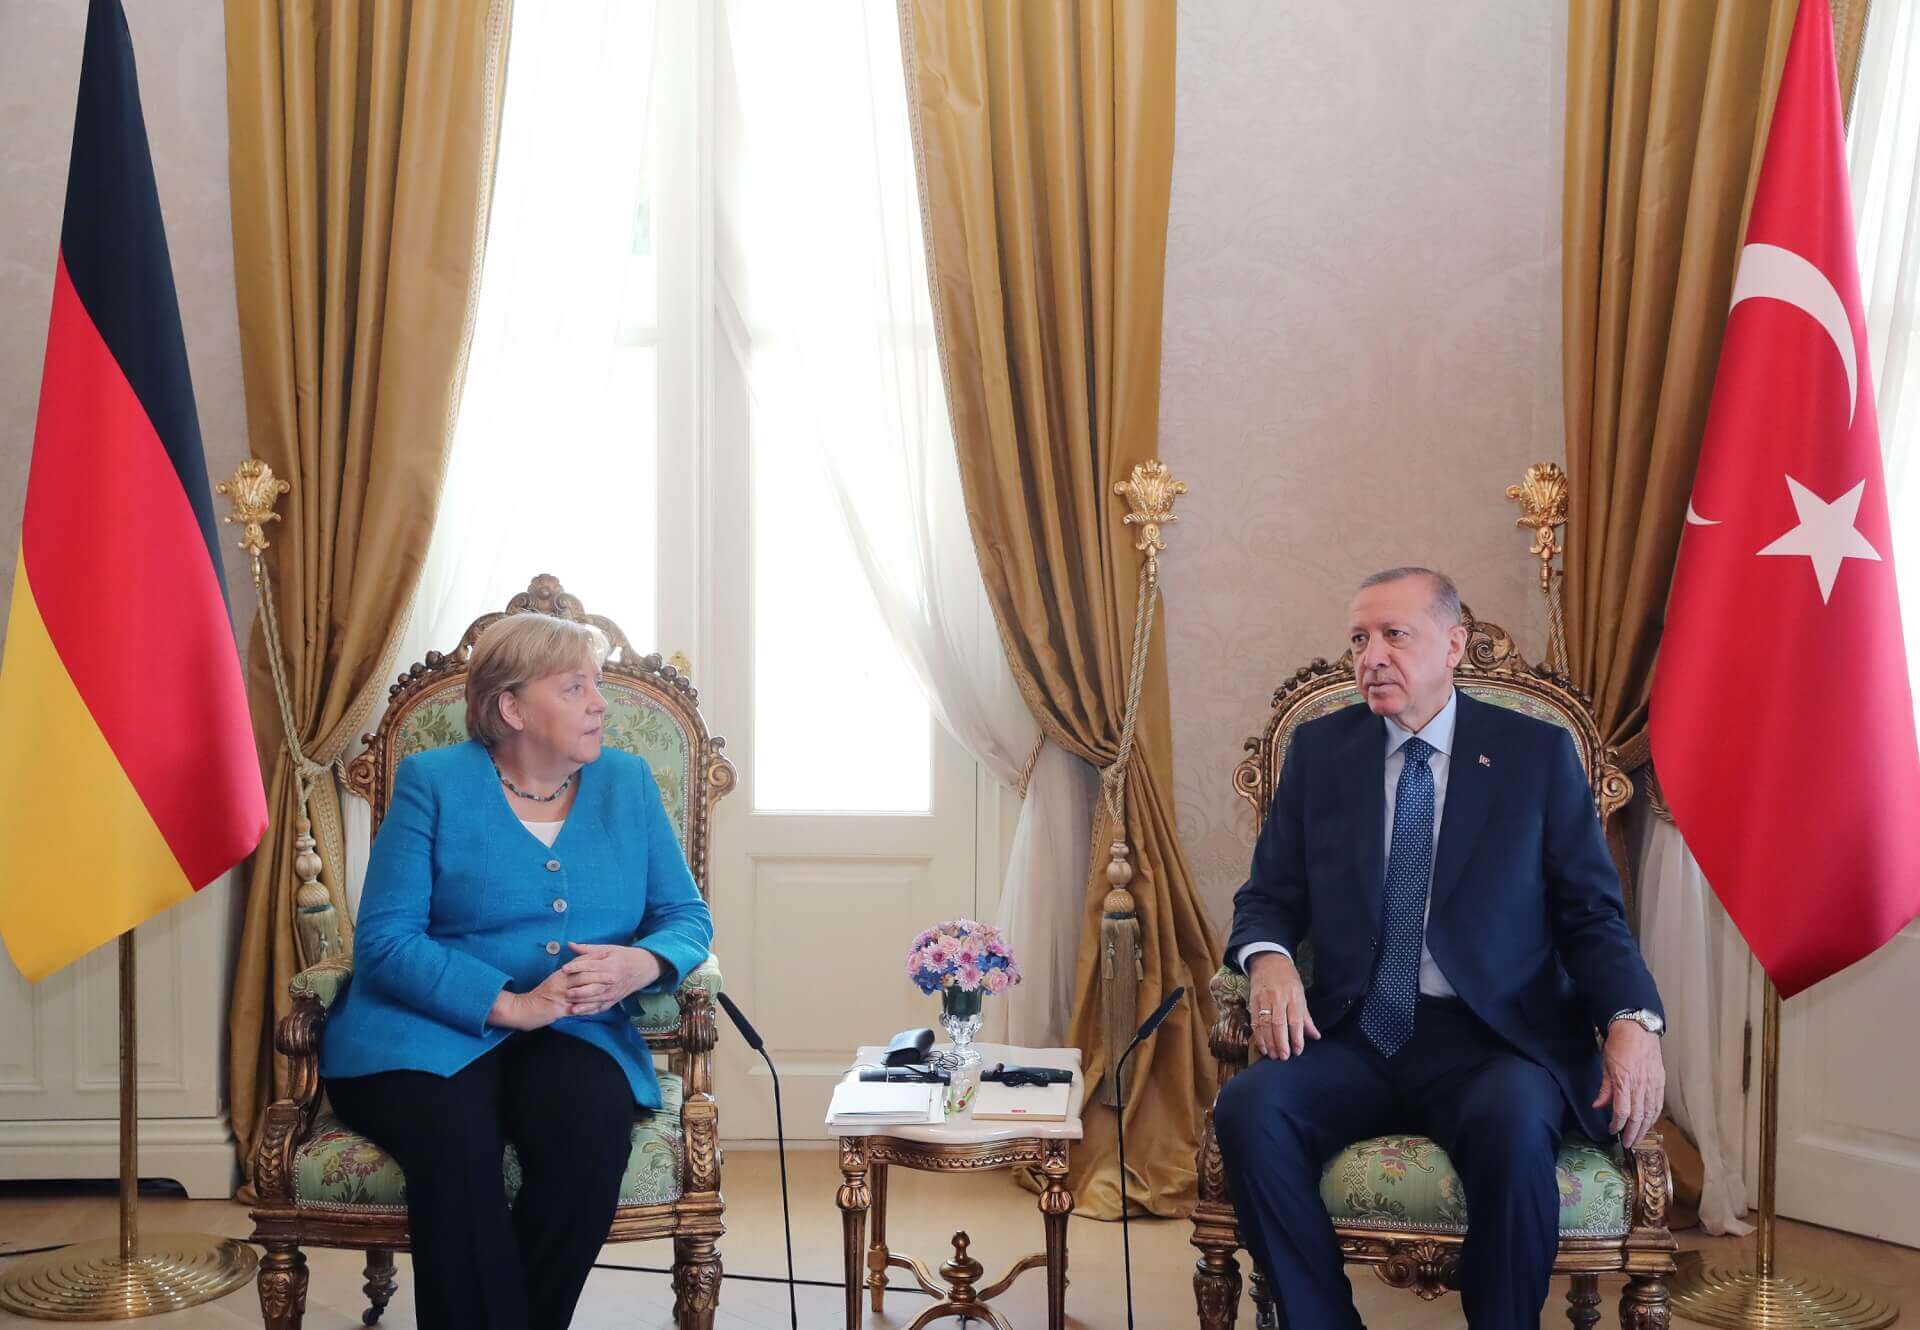 Merkel, Erdoğan Discuss Syria and Islamophobia in Farewell Trip